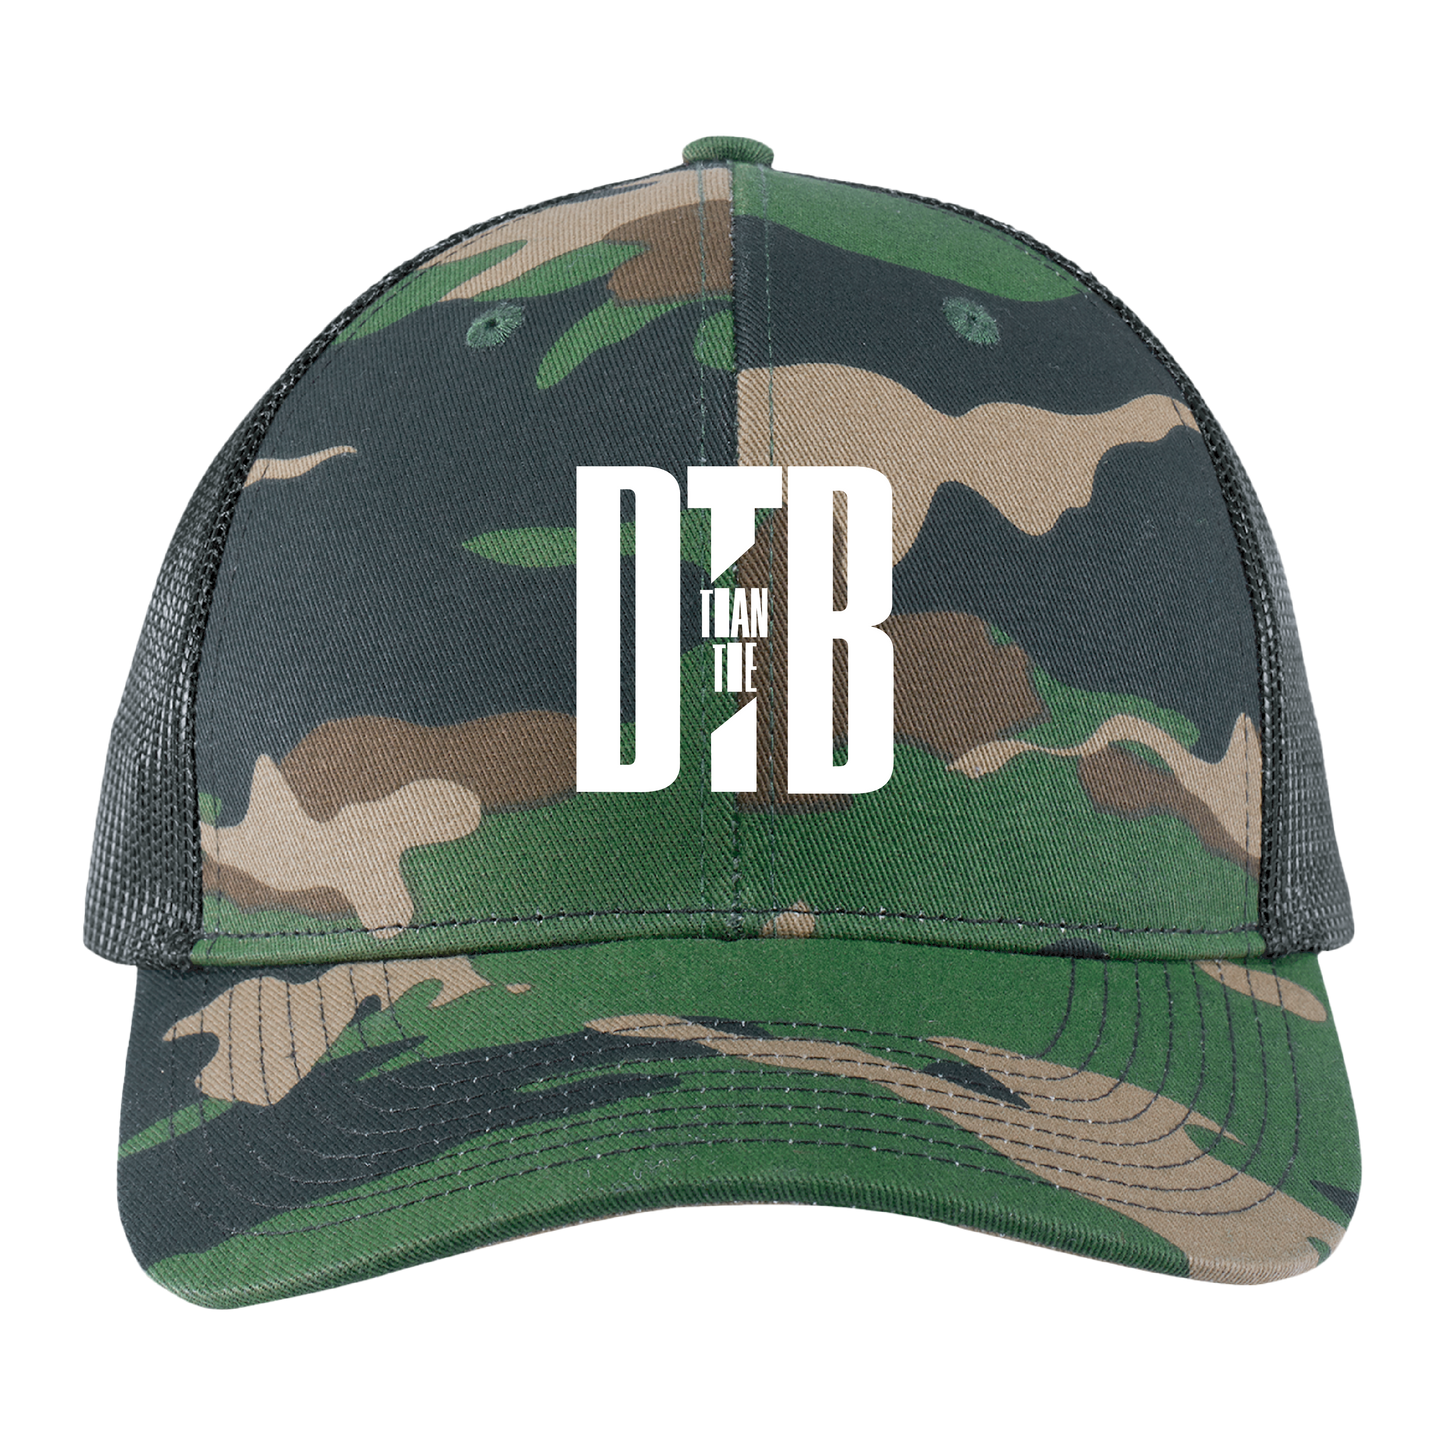 DTTB - Snapback Trucker Hat - Military Camo